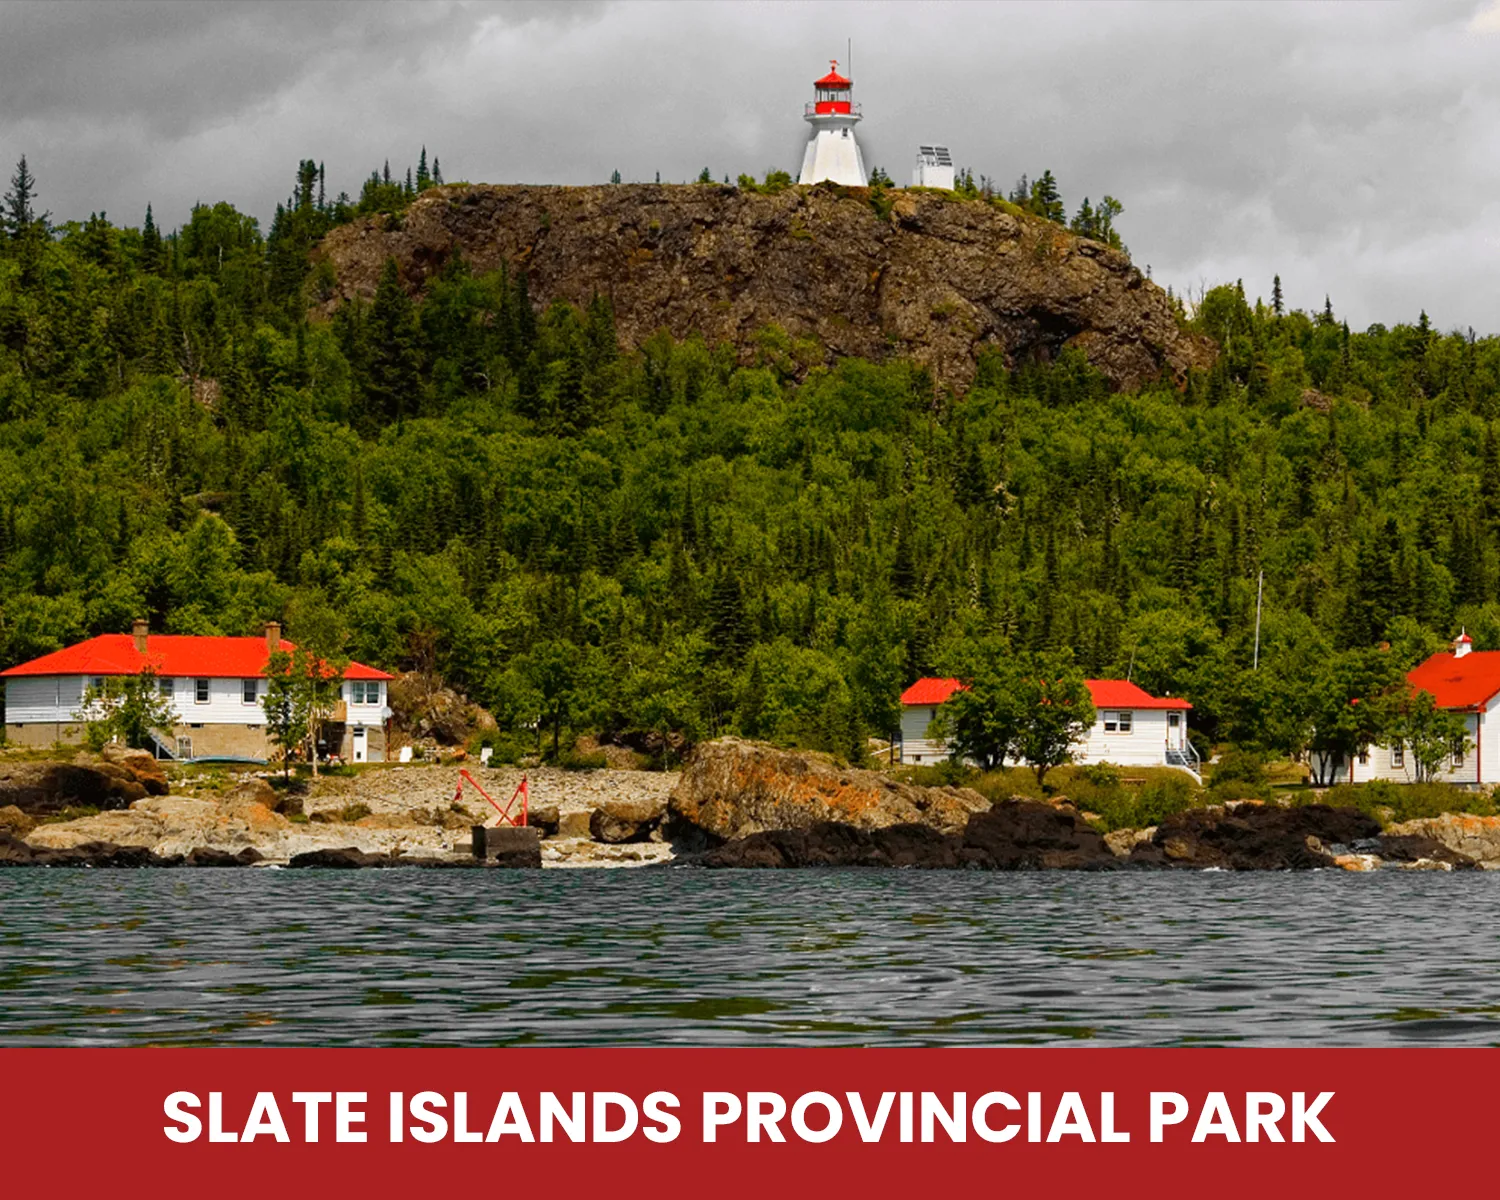 Slate Islands Provincial Park